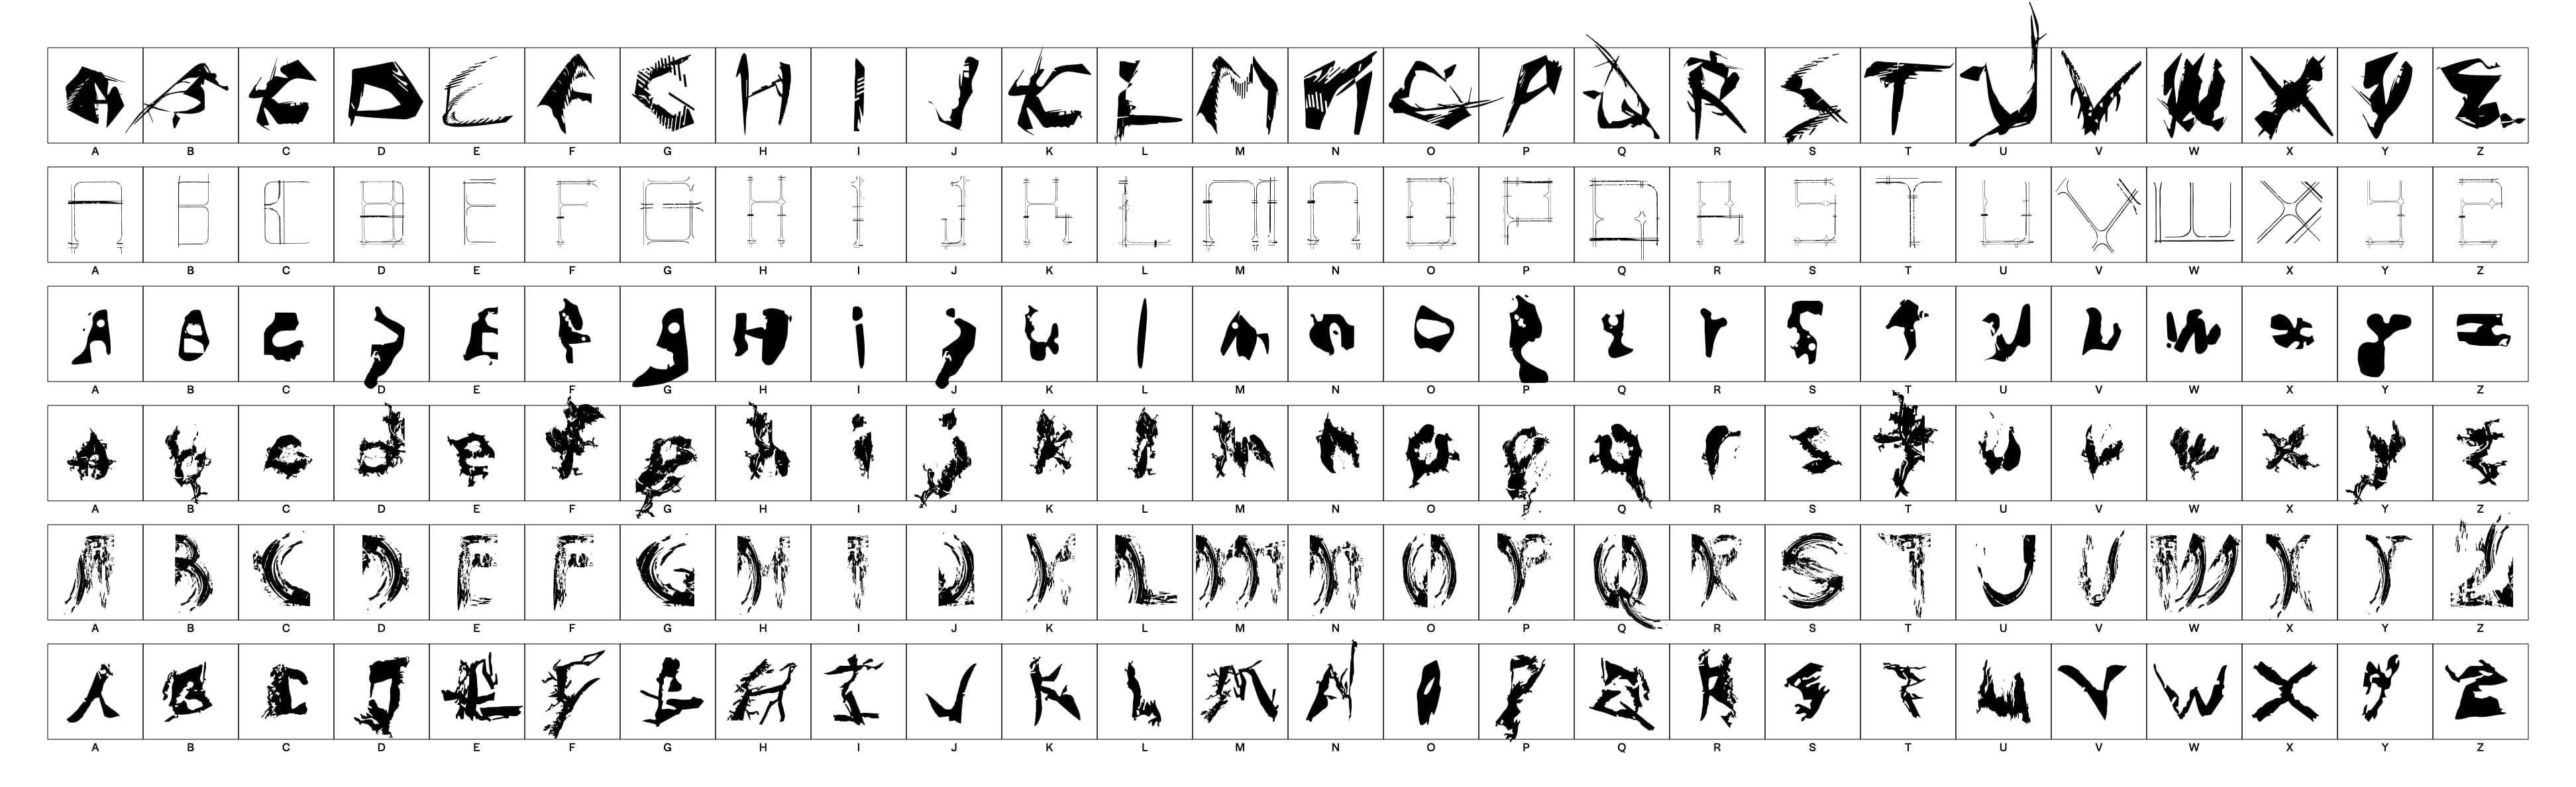 Full alphabet for all six fonts